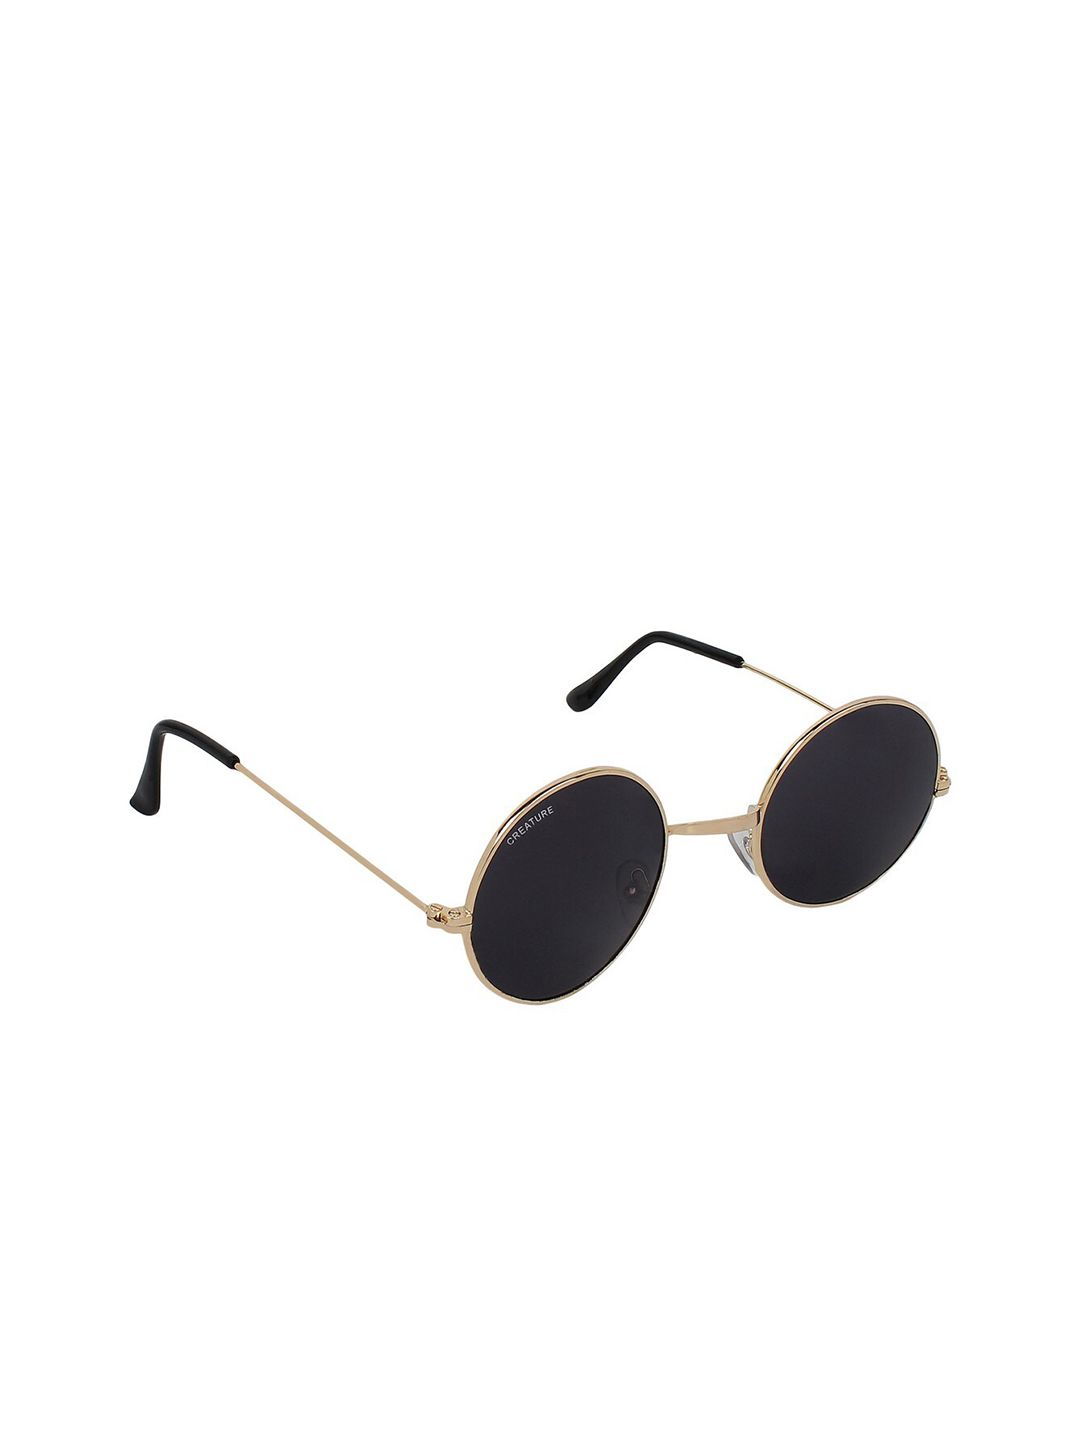 Creature Unisex Black Lens & Gold-Toned Round Sunglasses with UV Protected Lens SUN-014 Price in India